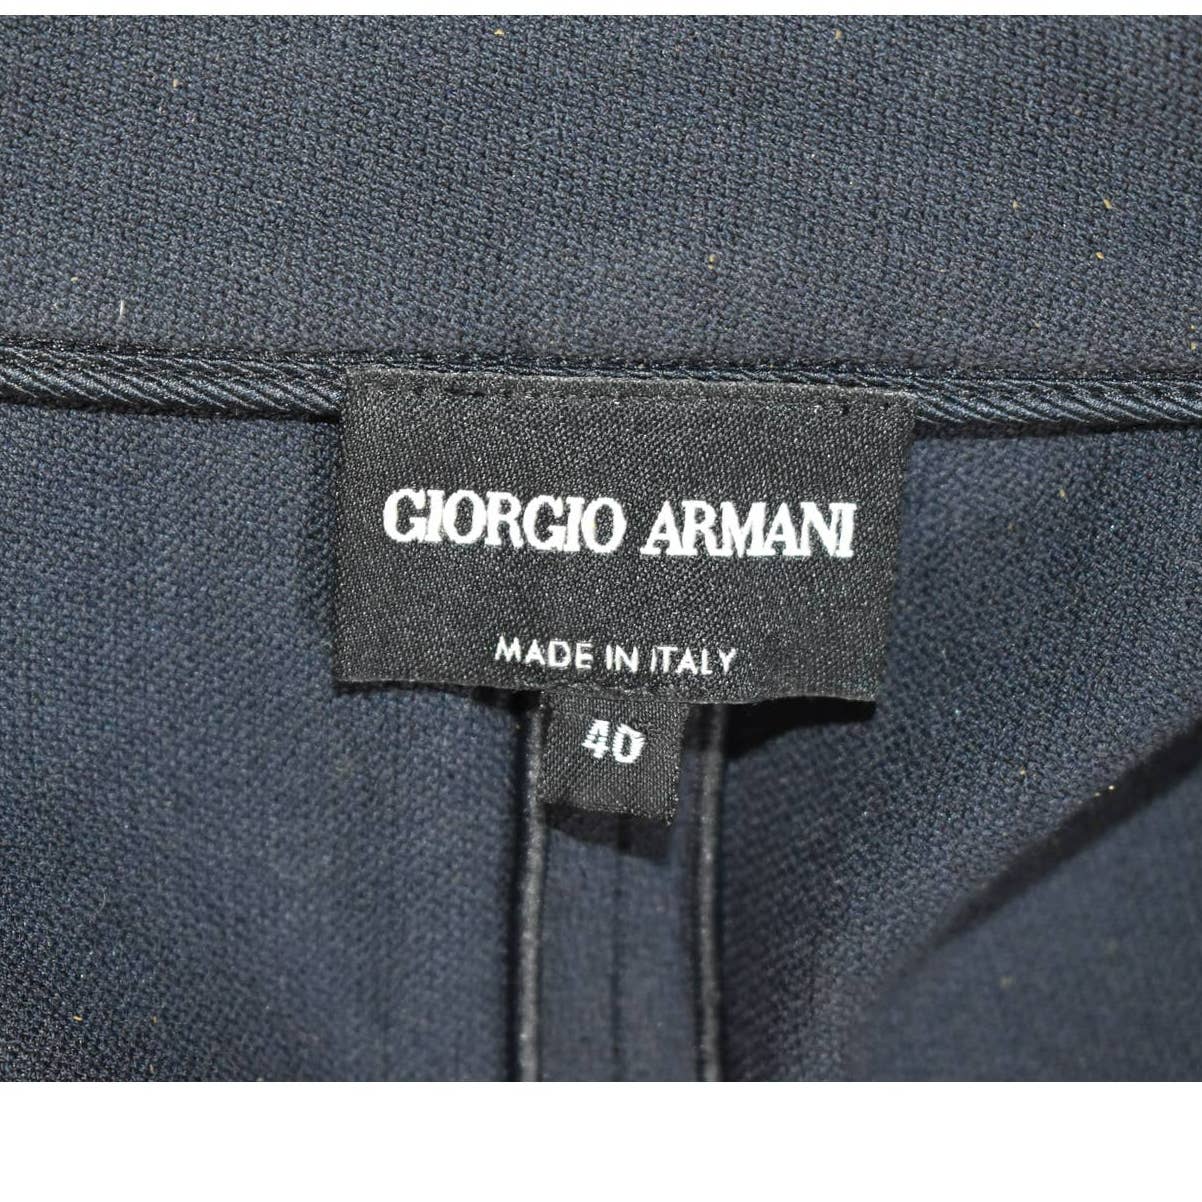 Giorgio Armani Black Crepe Unlined Blazer Jacket - 40 / 4